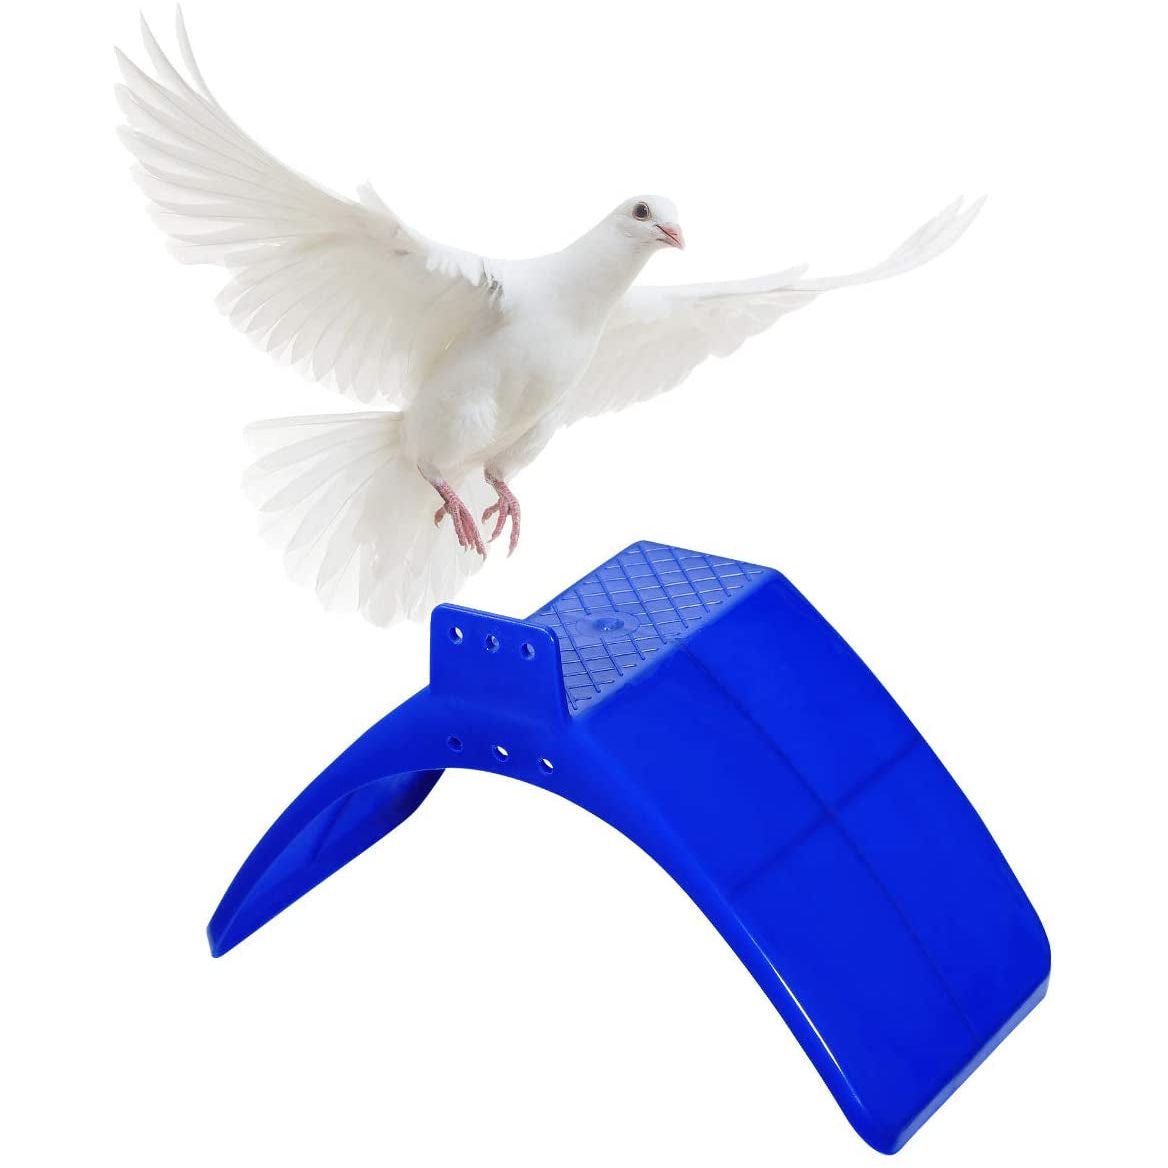 Odihnitor pentru porumbei, albastru, Tehno Ms #326